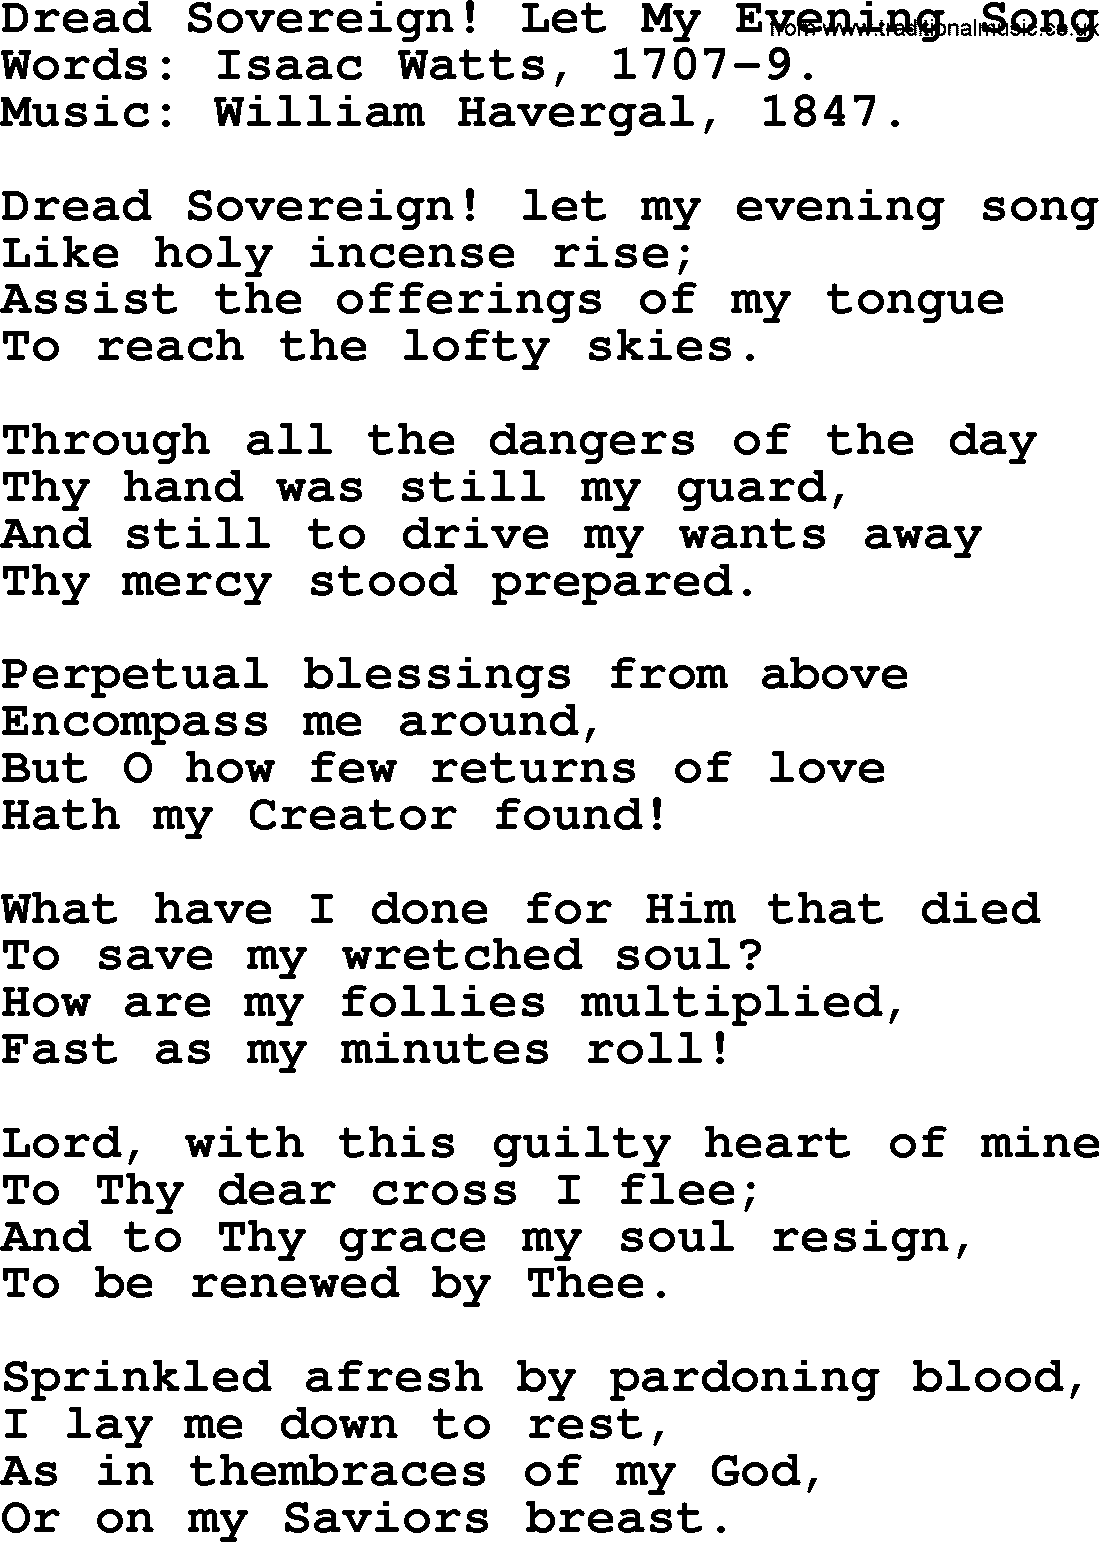 Isaac Watts Christian hymn: Dread Sovereign! Let My Evening Song- lyricss